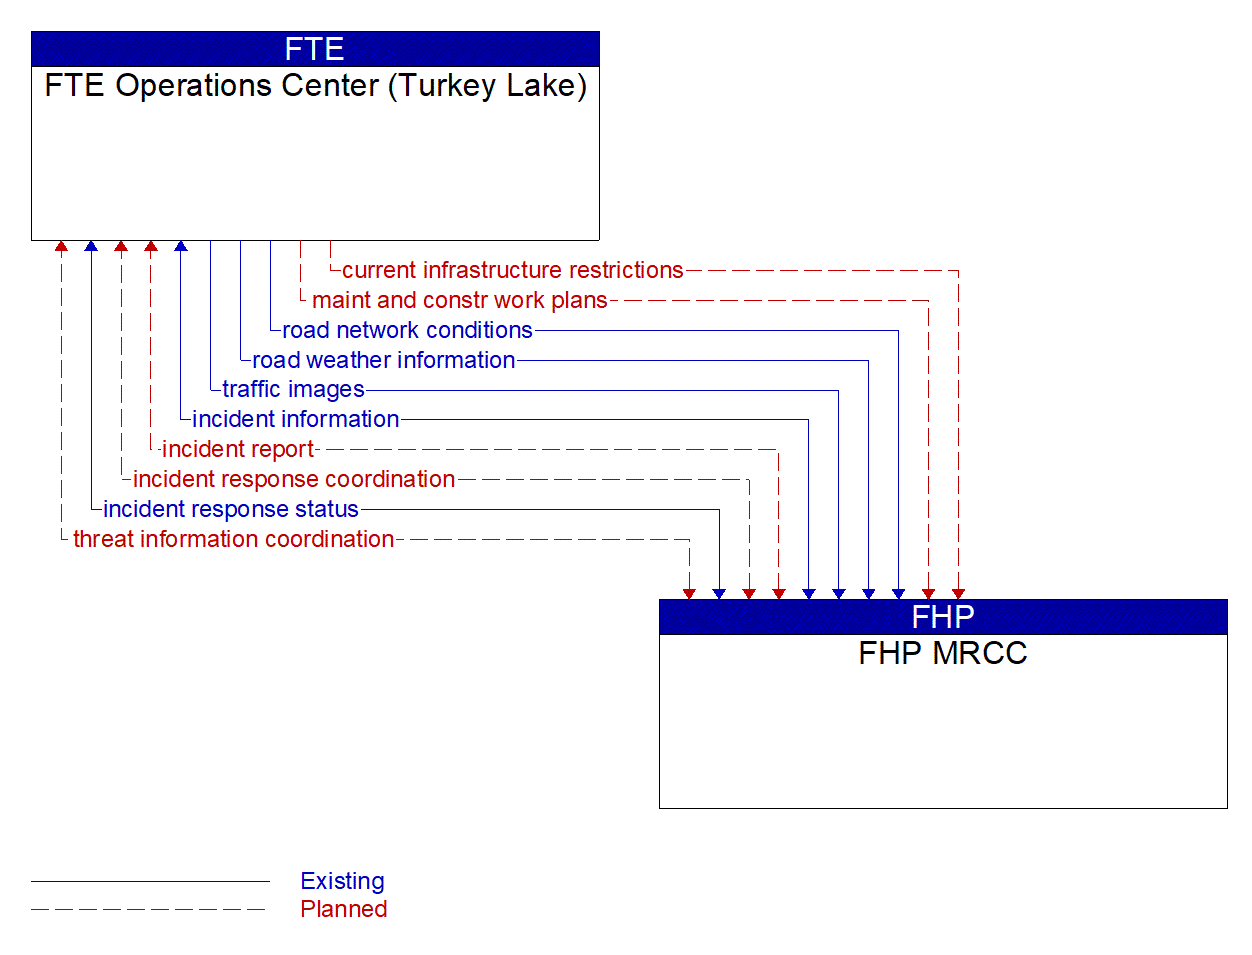 Architecture Flow Diagram: FHP MRCC <--> FTE Operations Center (Turkey Lake)